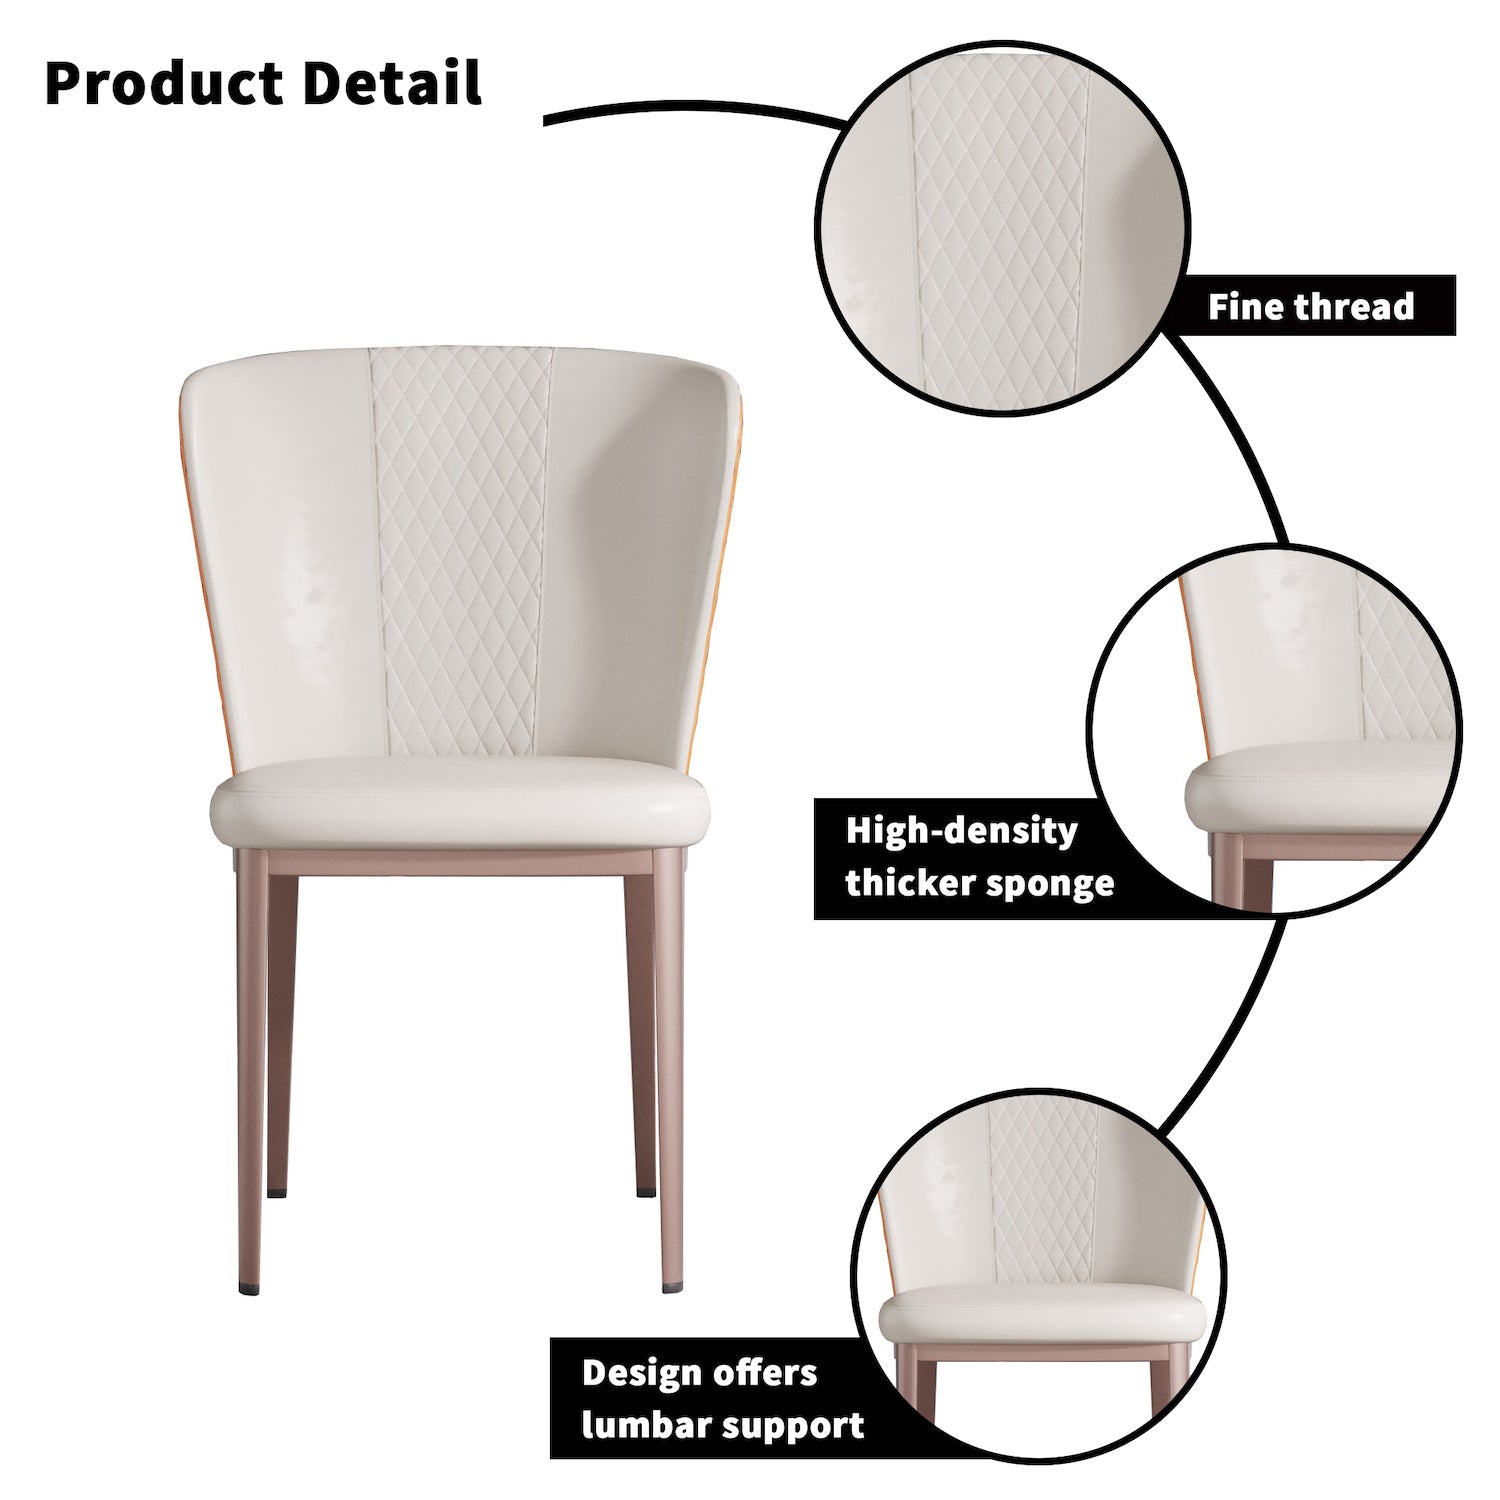 Atunus Modern Dining Side Chair Set of 2 - White & Orange